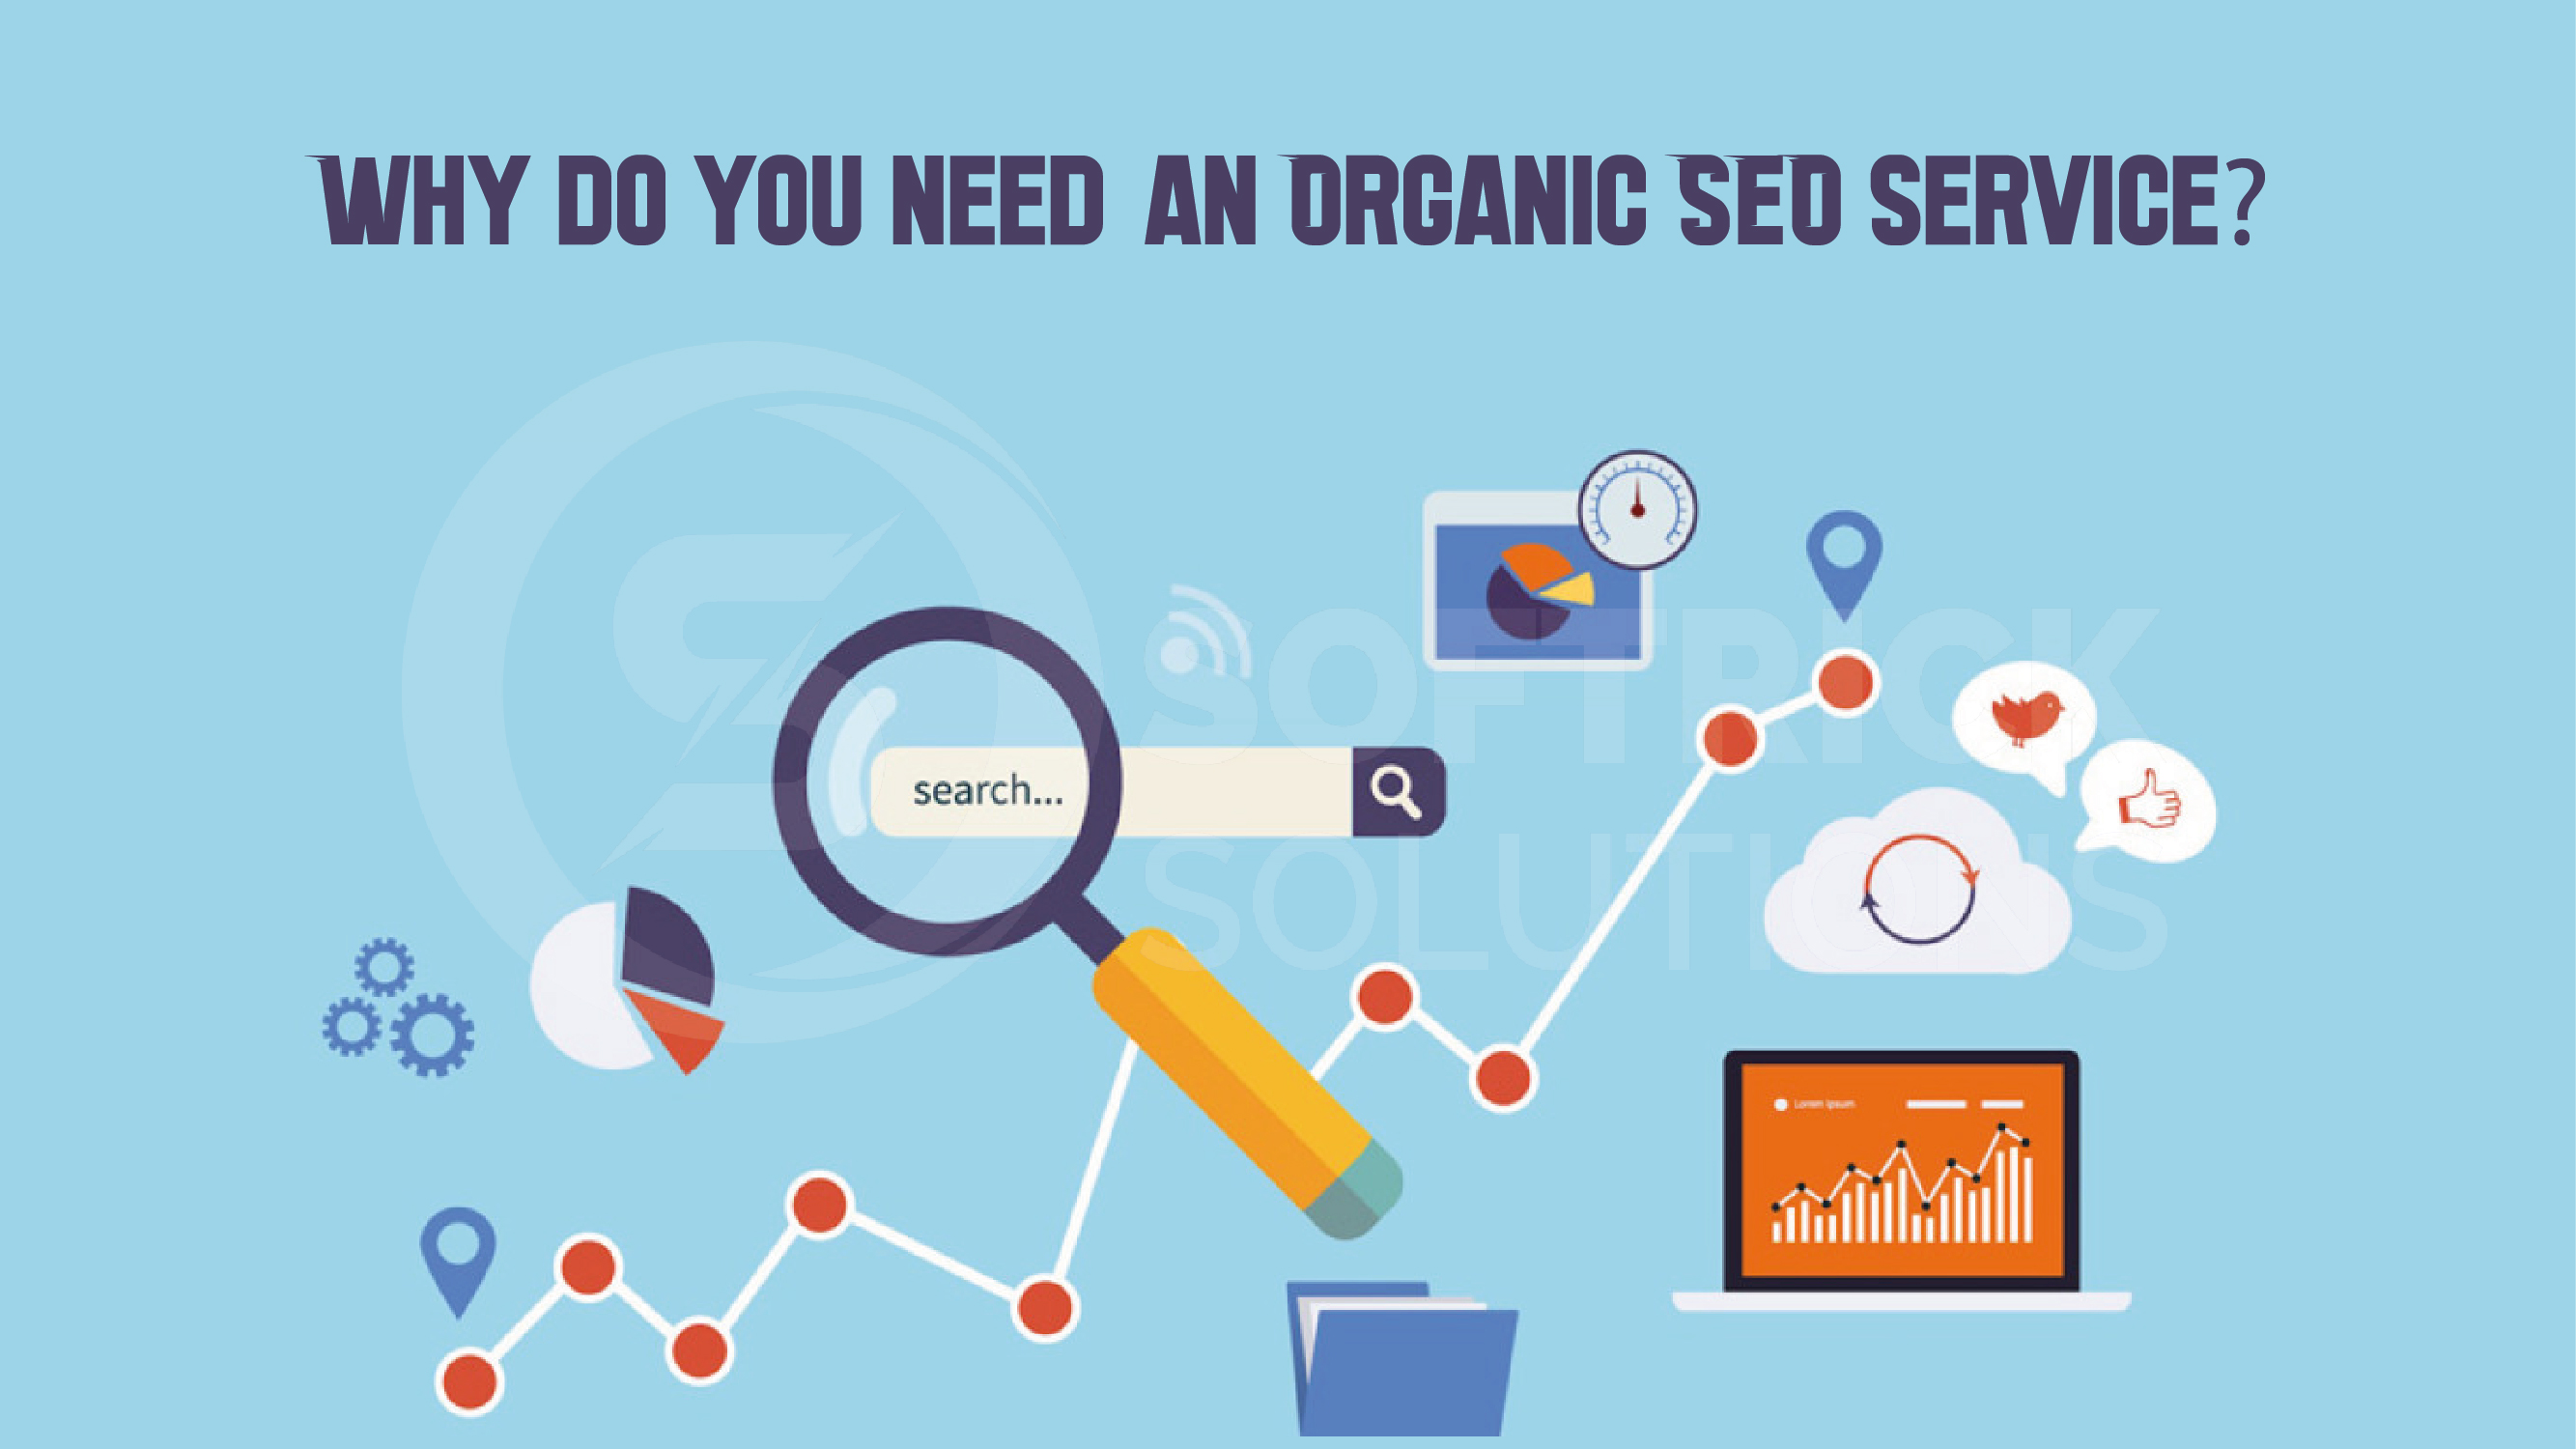 Why do you need an Organic SEO service